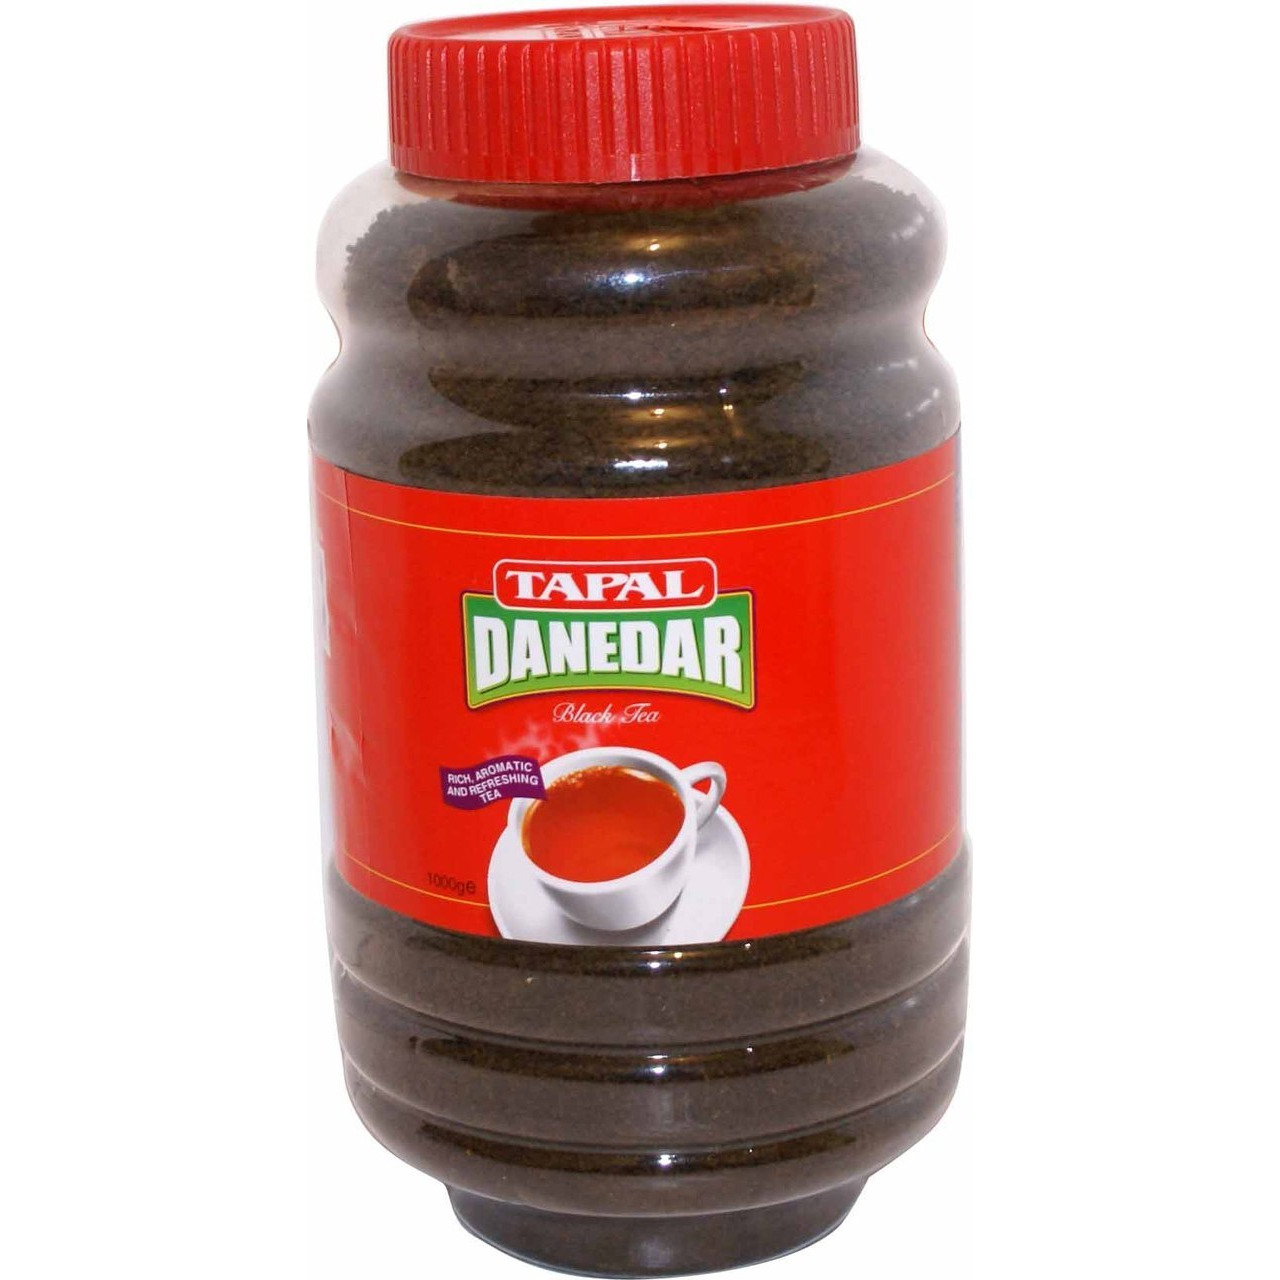 Case of 12 - Tapal Danedar Black Tea Jar - 1 Kg (2.2 Lb)